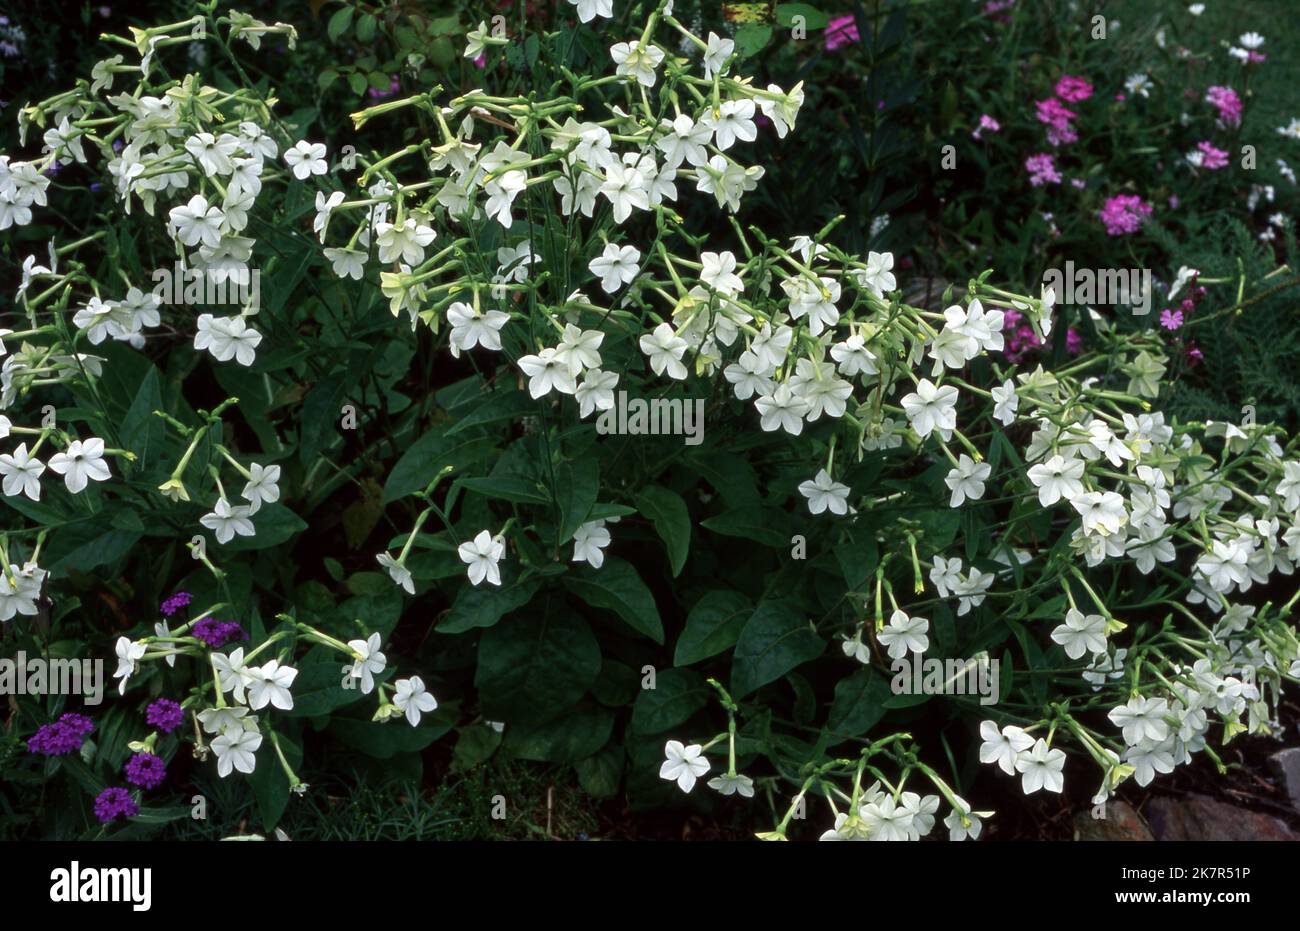 Nicotiana, Domino Series (Flowering tobacco). Purple flower is Verbena x hybrida. Stock Photo